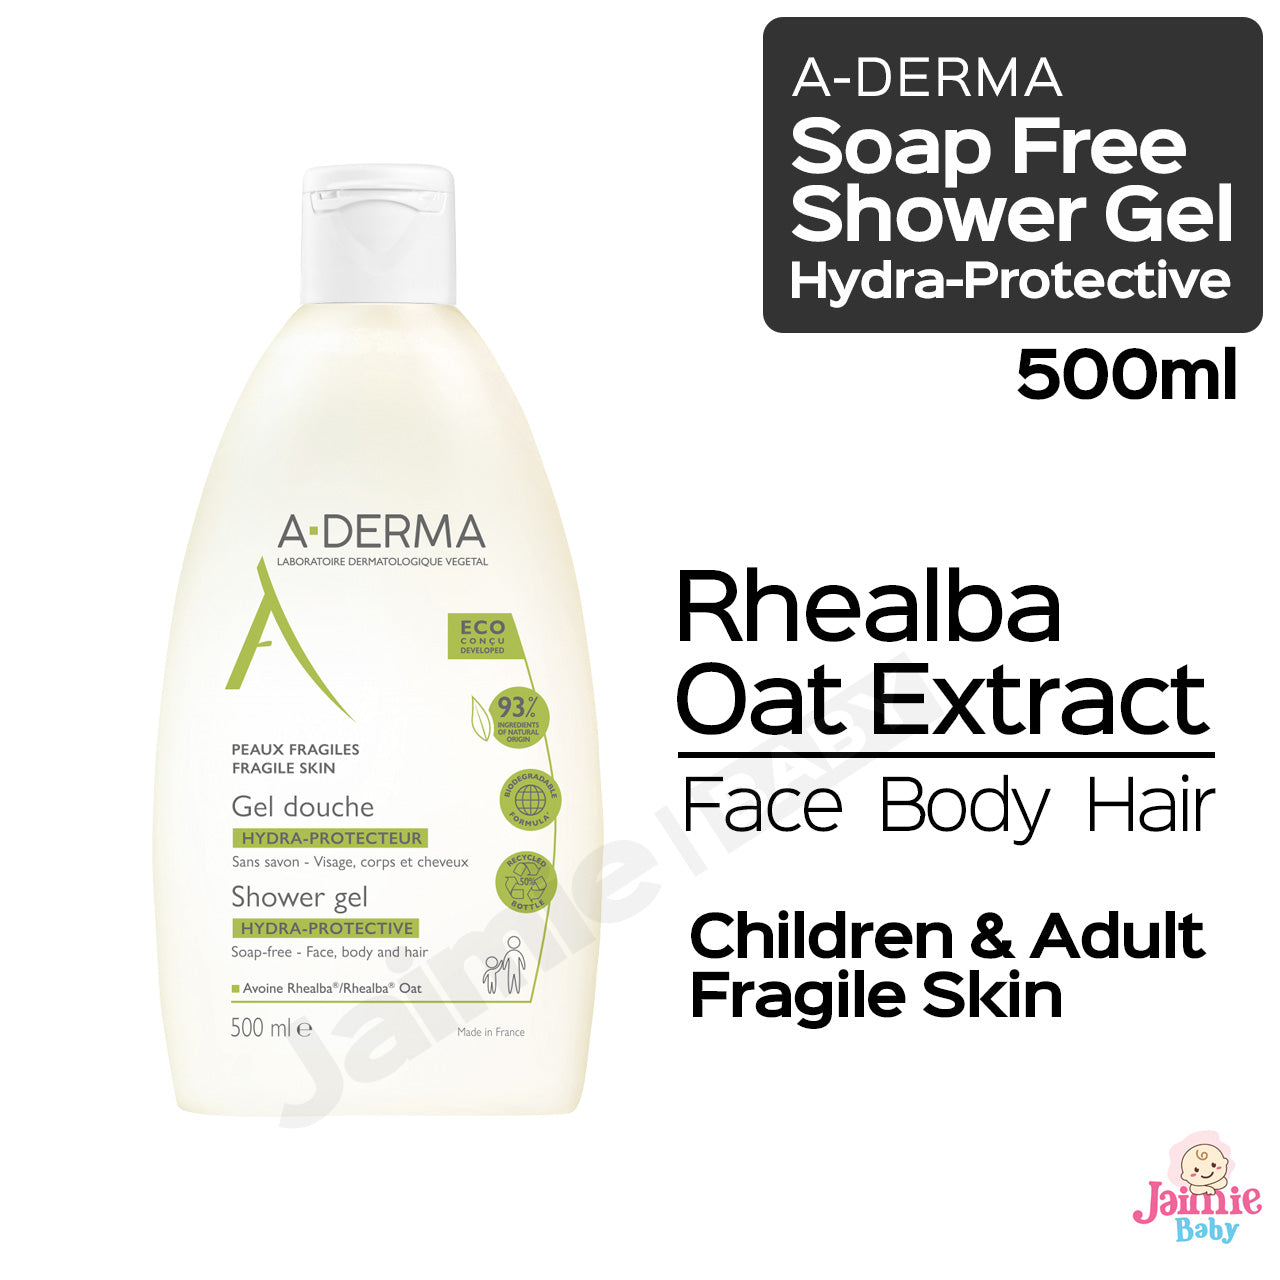 A Derma Soap Free Shower Gel face body hair for fragile skin